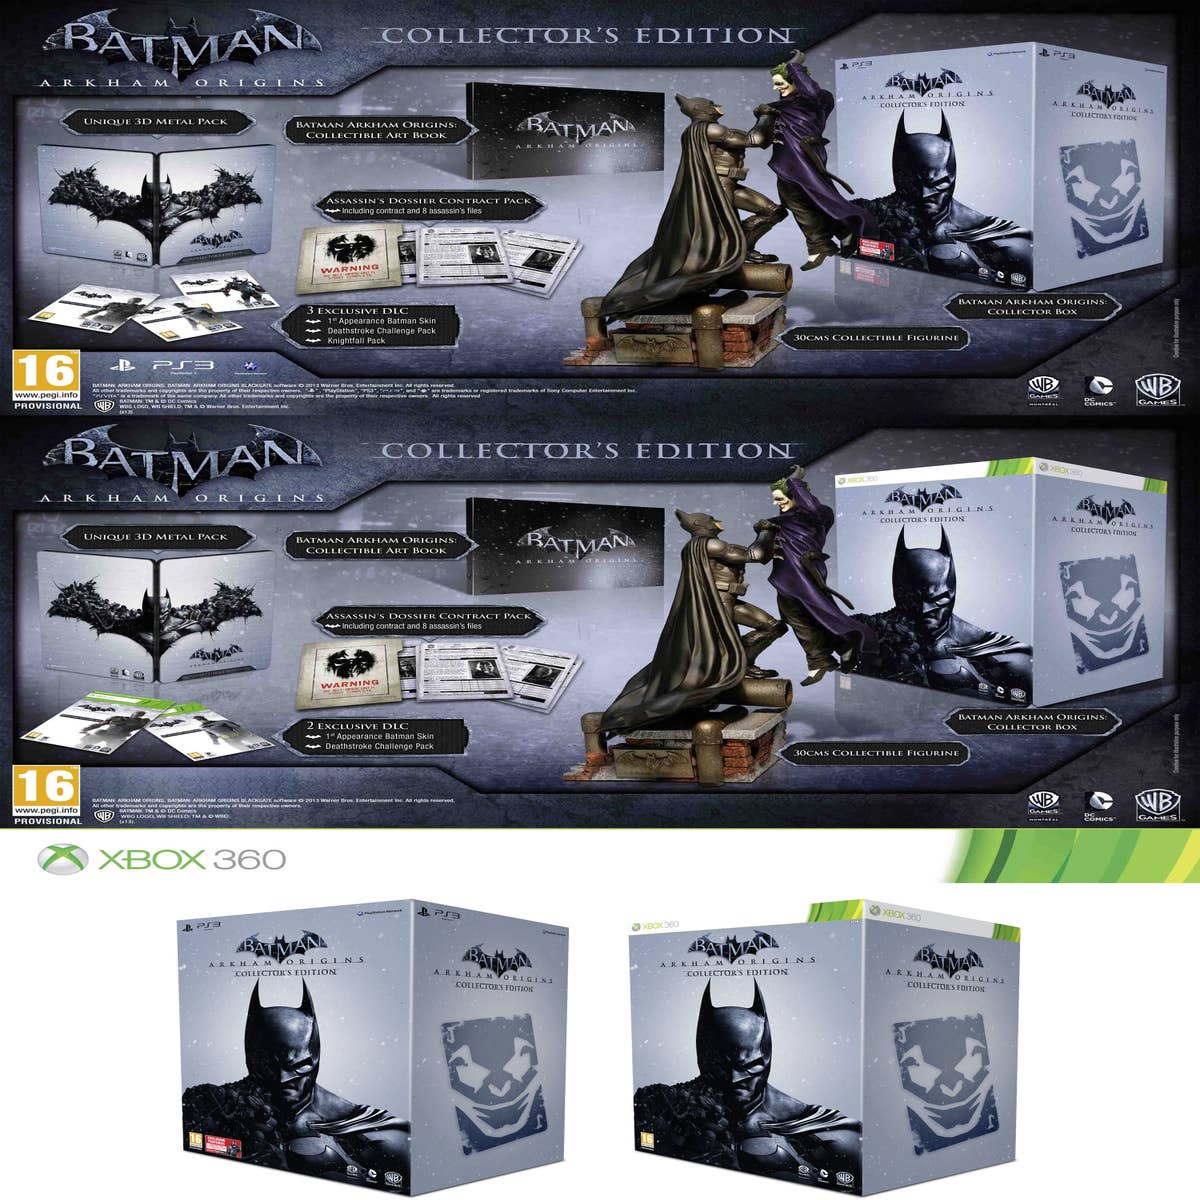 Batman: Arkham Origins' £ Collector's Editions detailed 